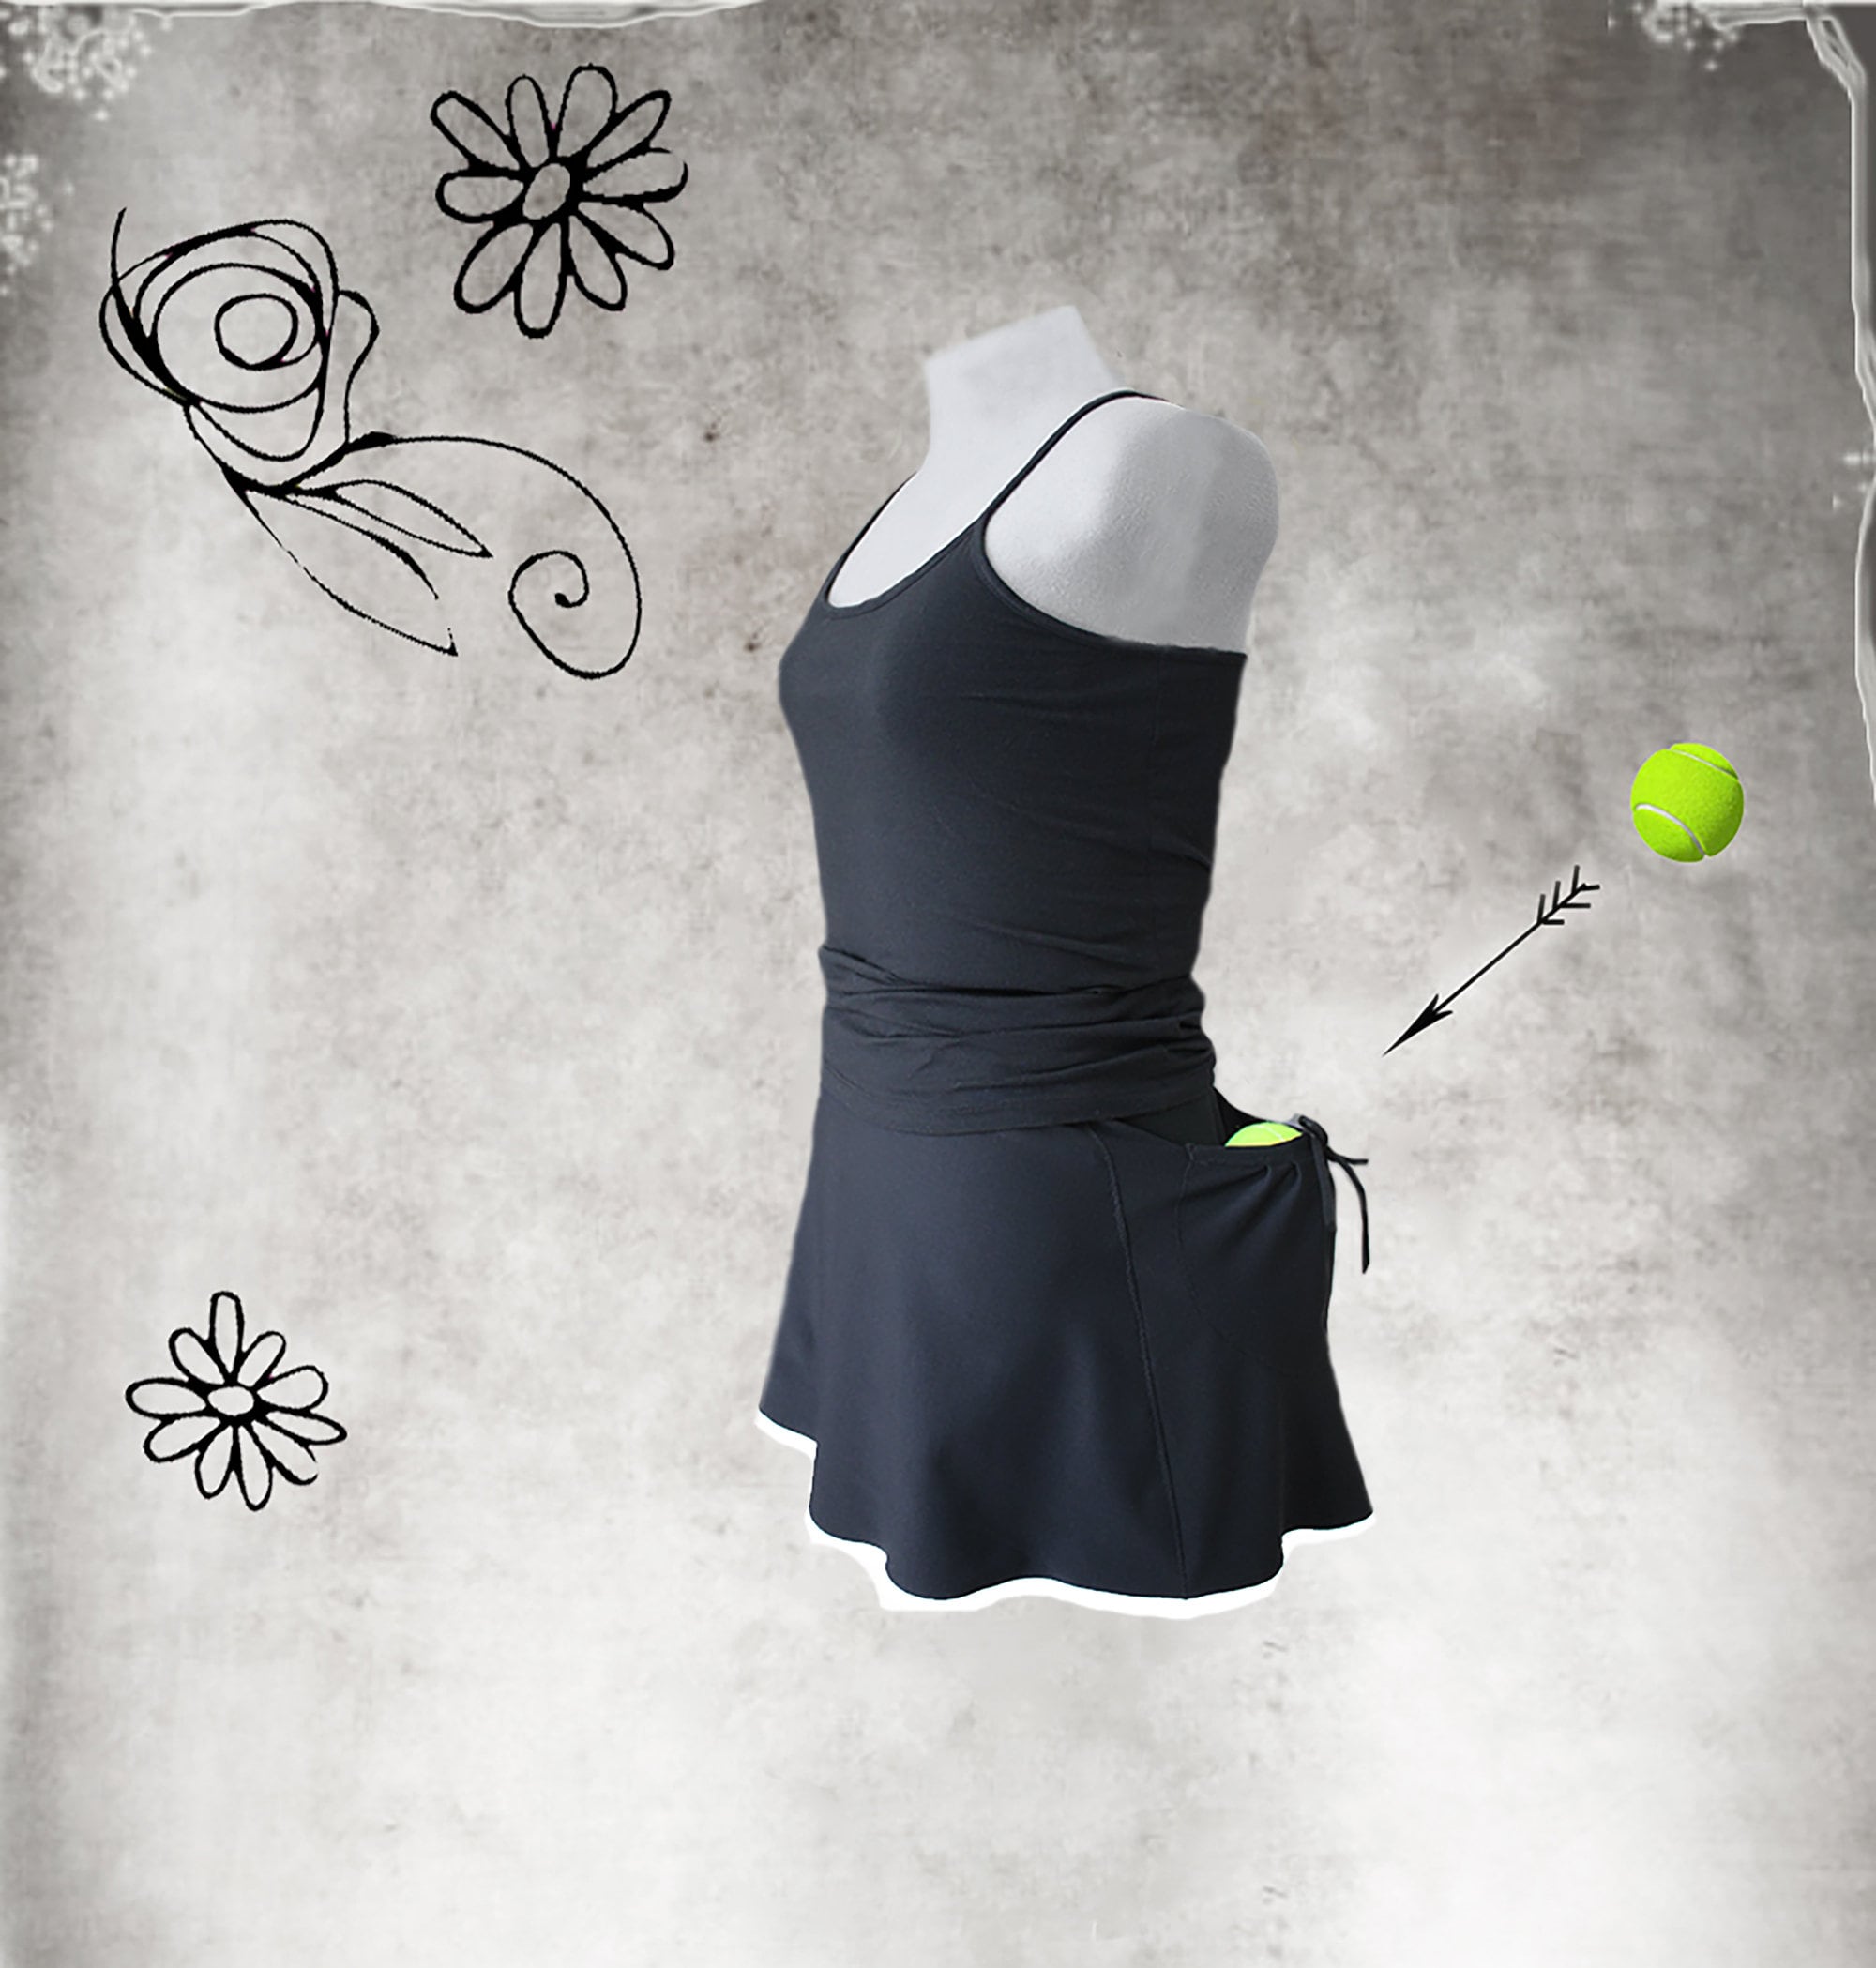 cherono nancy recommends tennis skirt no shorts pic